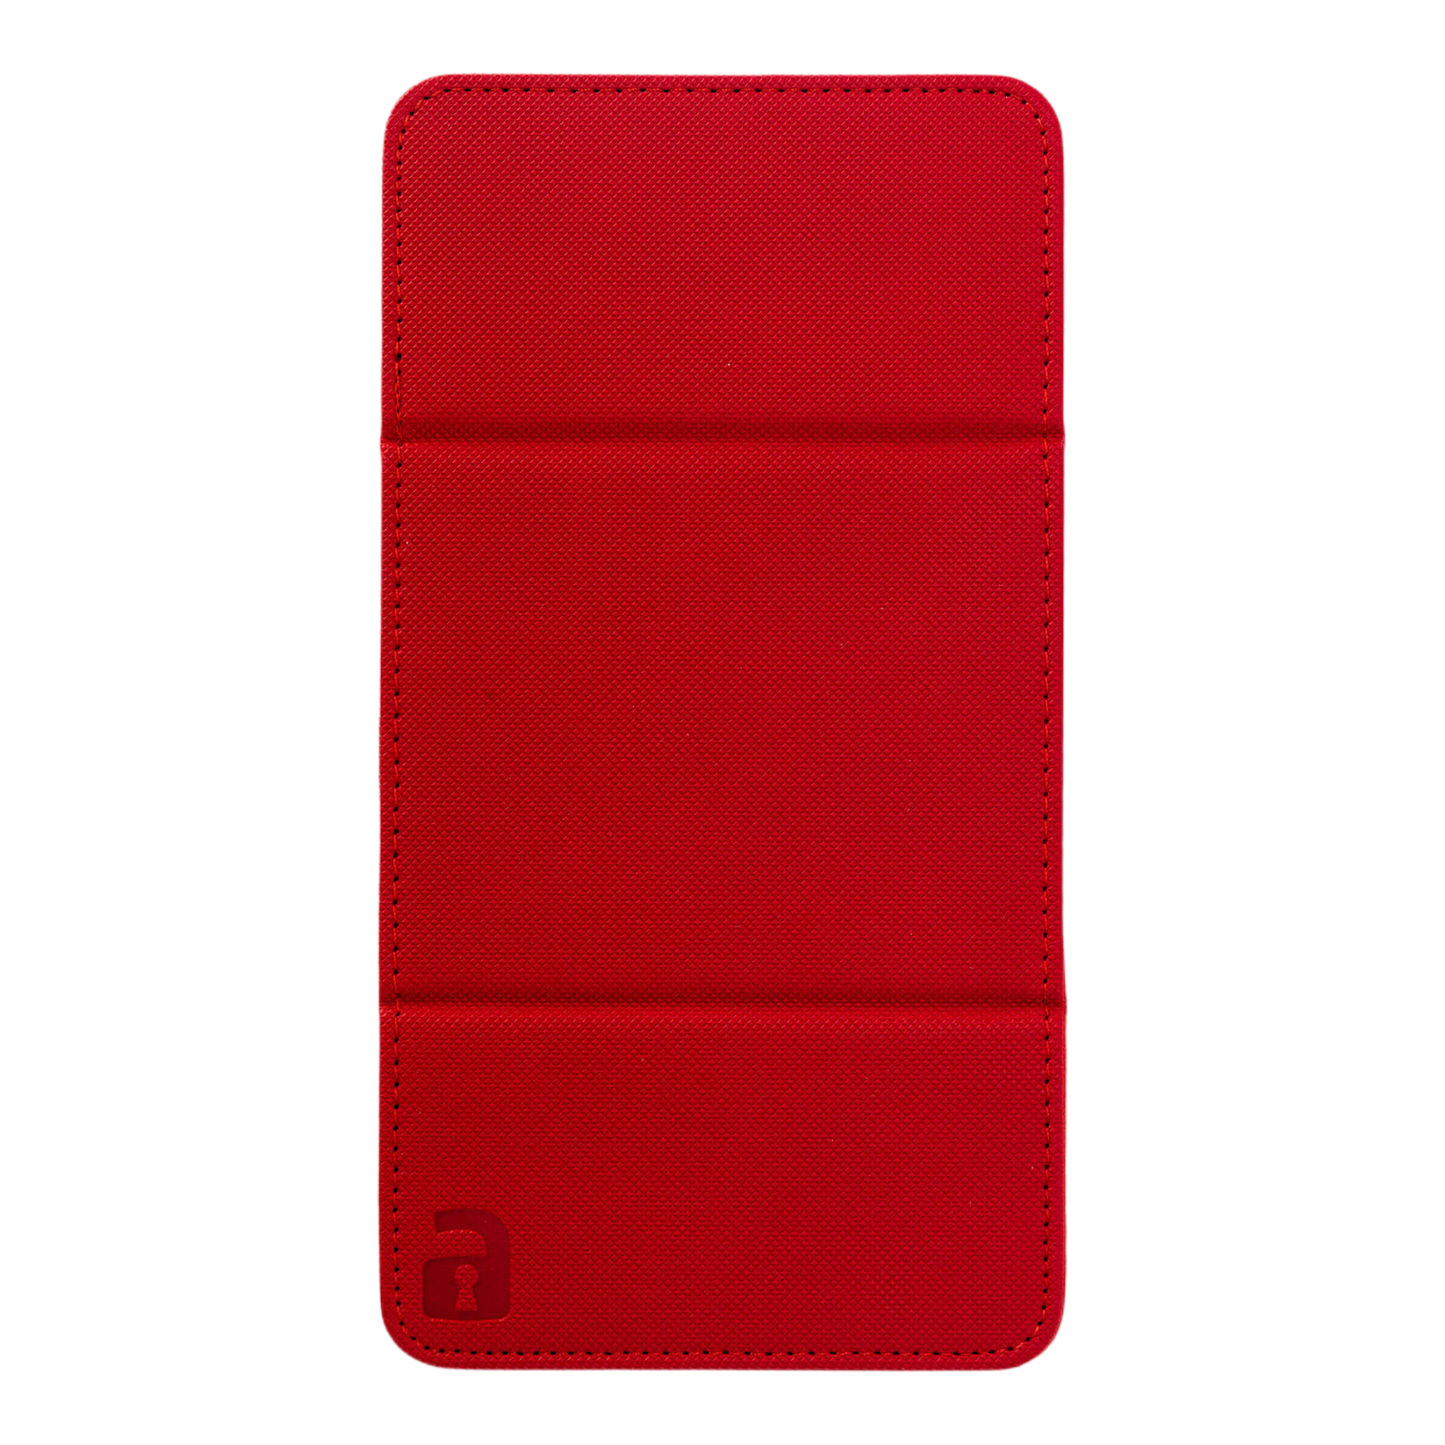 Sideloading Deck Box 100+ Red